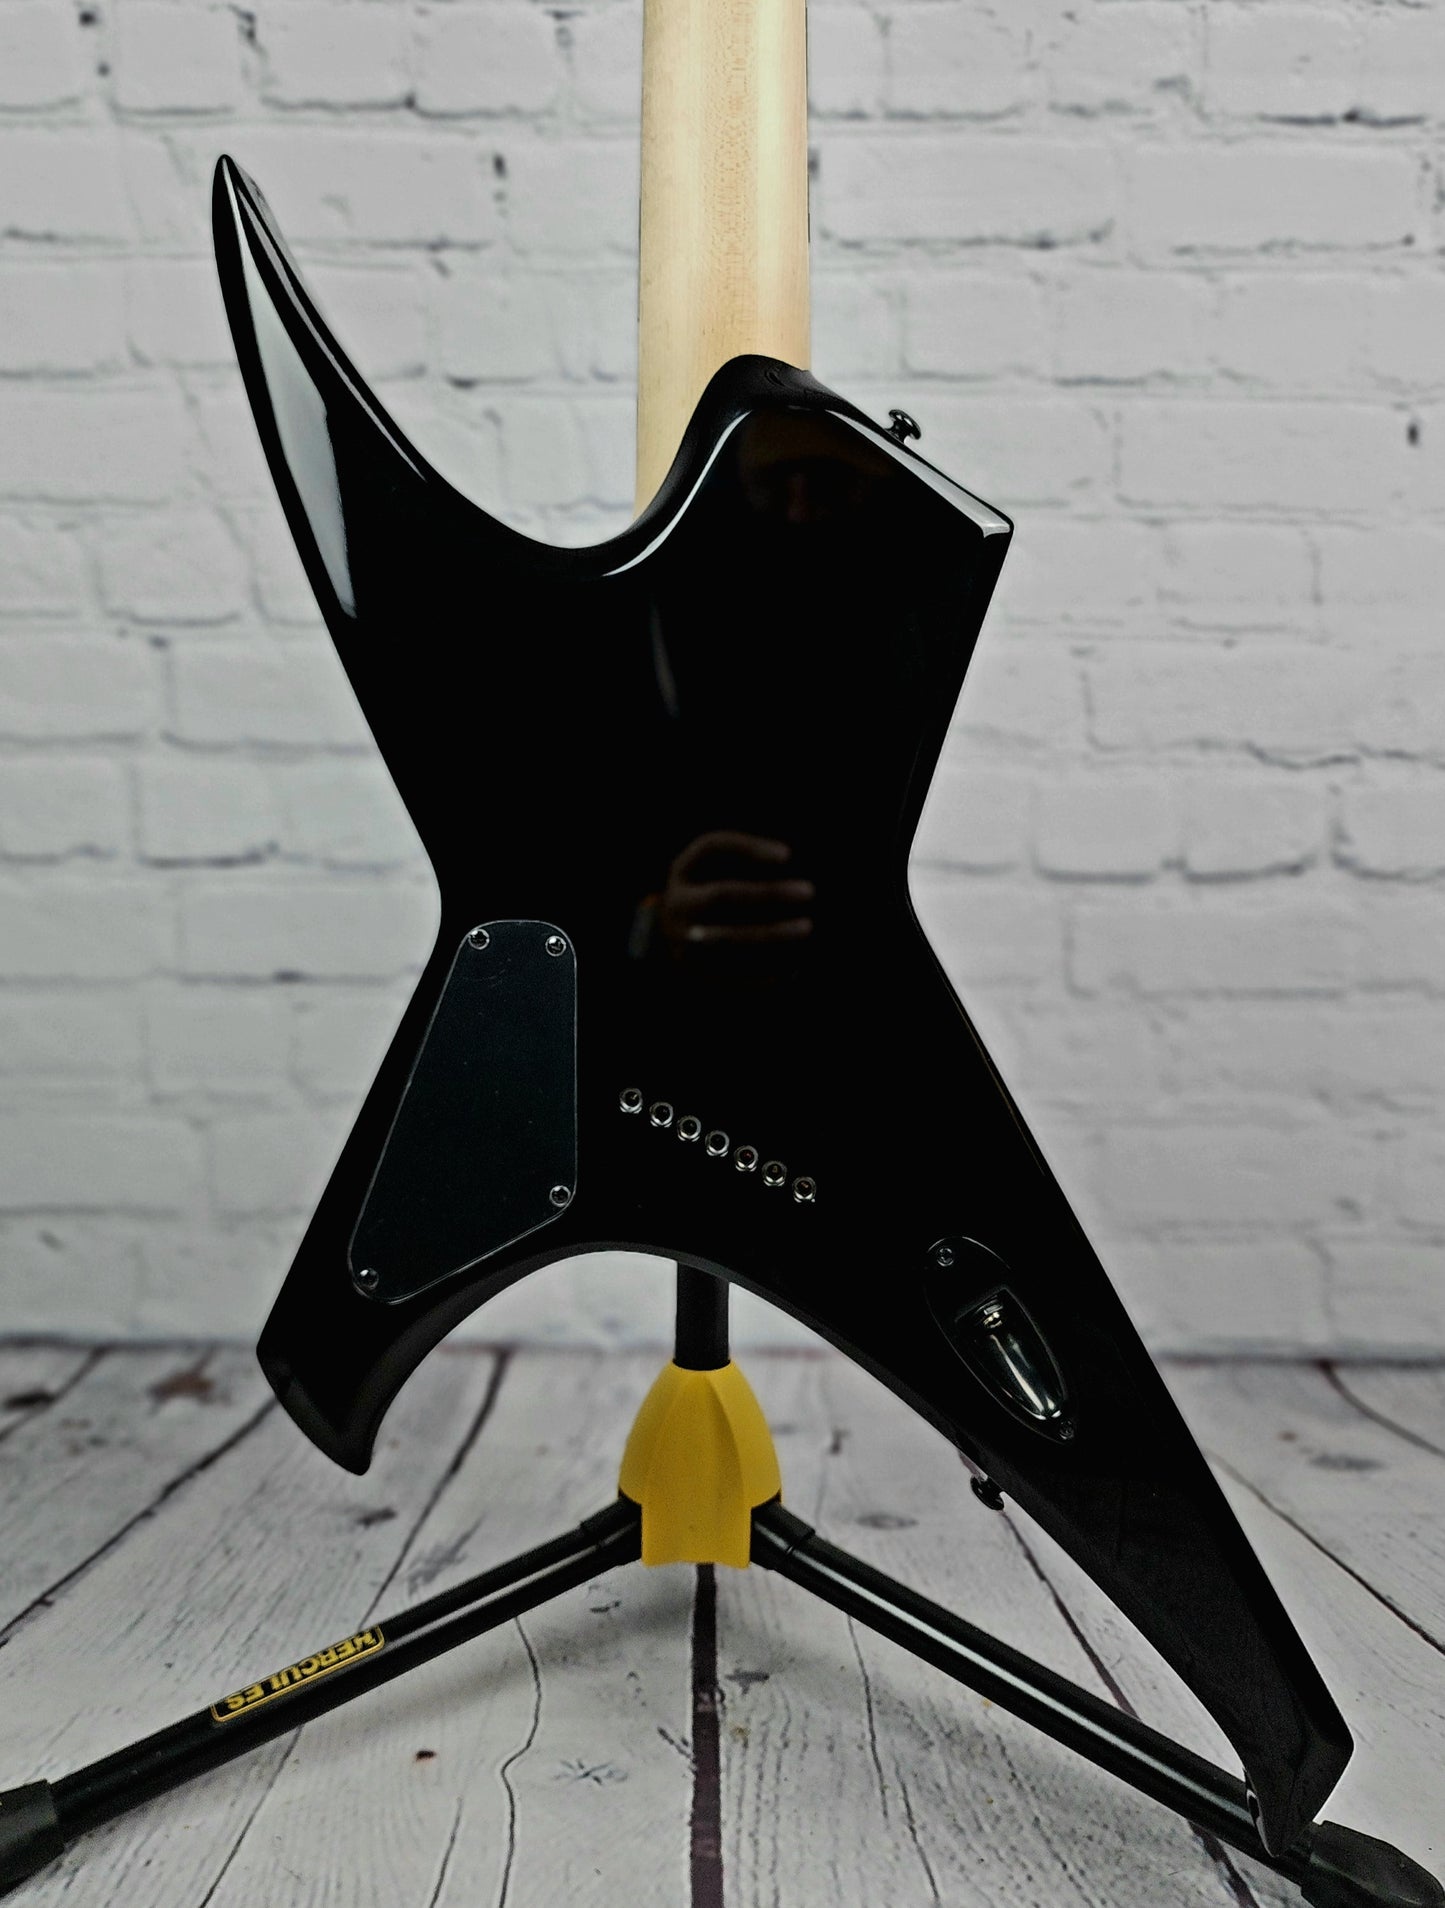 Ormsby Guitars Metal X GTR 7 String Electric Guitar Dahlia Black RUN 16